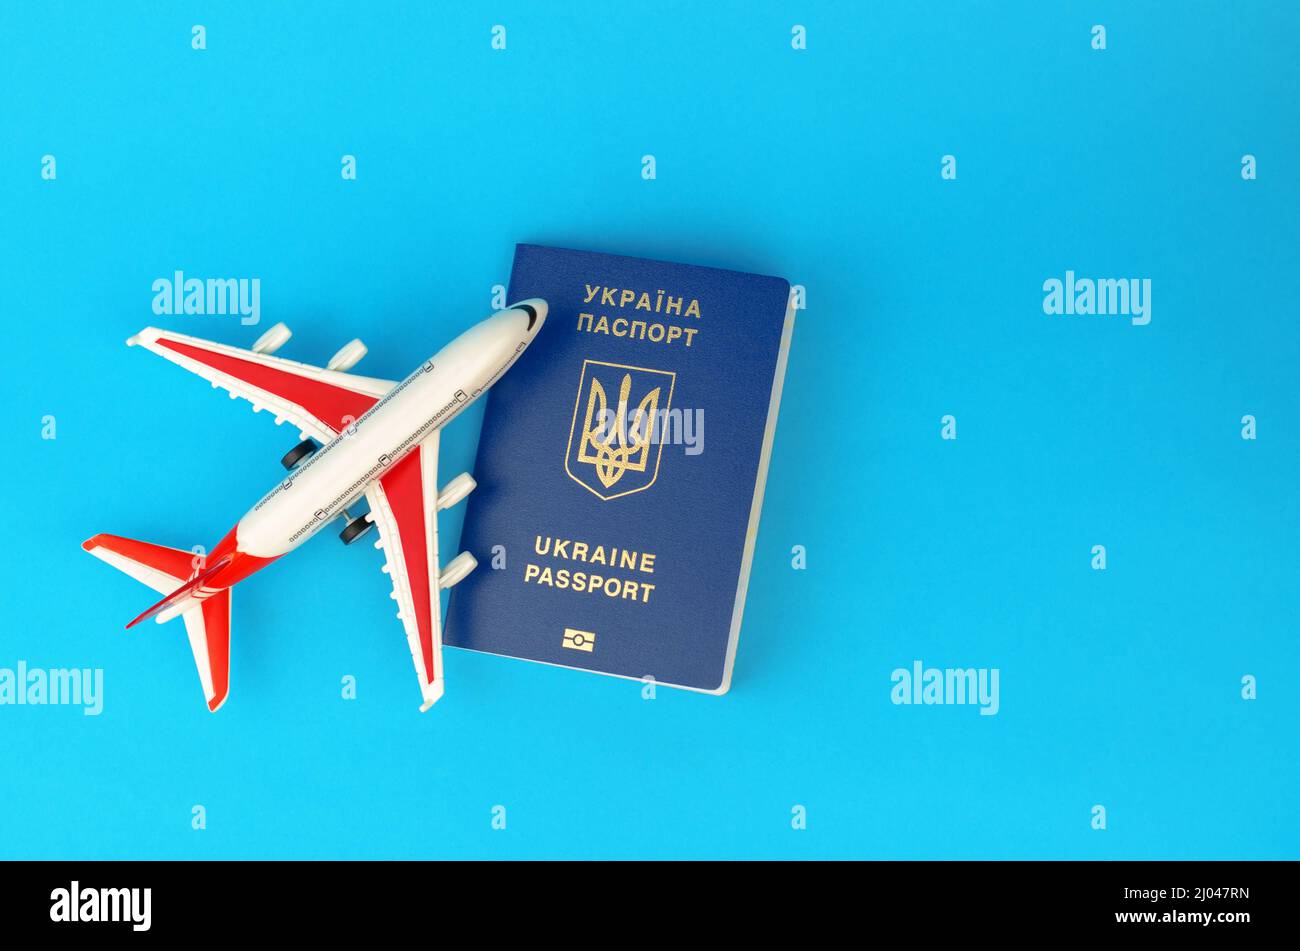 Passport of a citizen of Ukraine and a toy plane on a blue background. Inscription in Ukrainian Ukraine Passport. Stock Photo